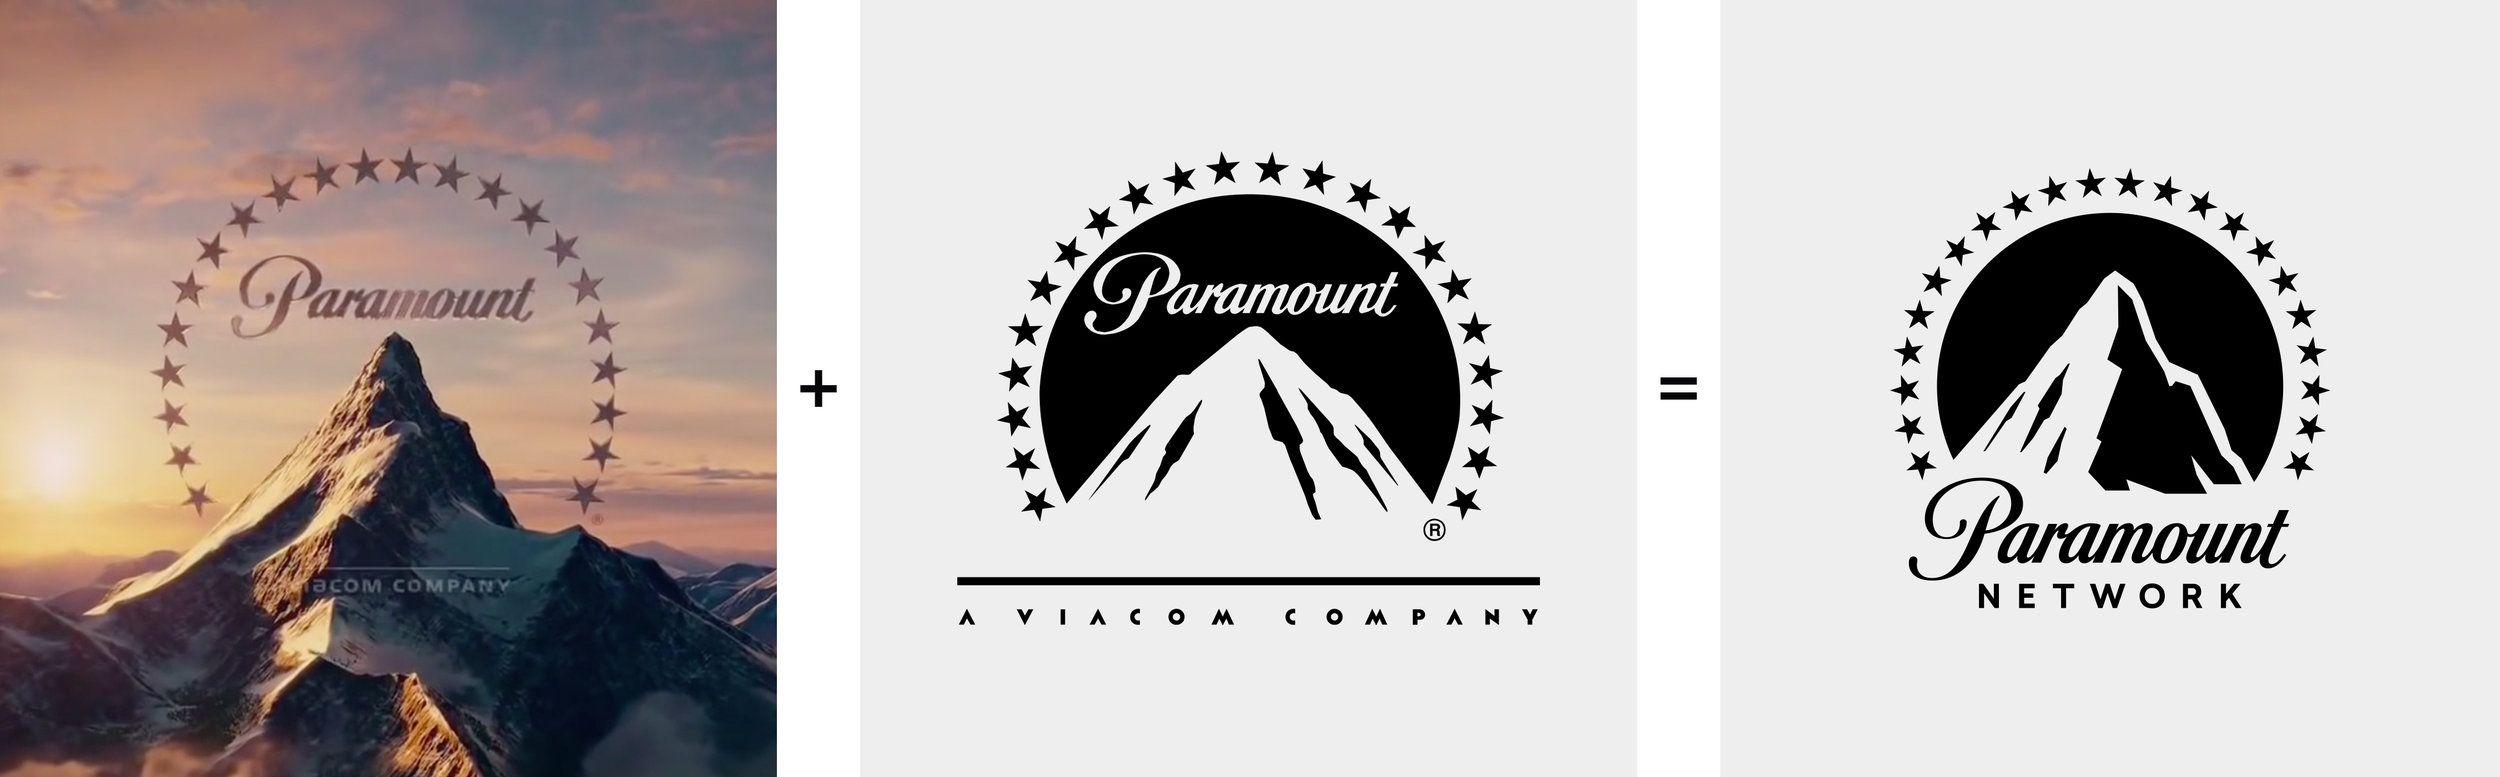 Paramount Network Logo - Paramount Network